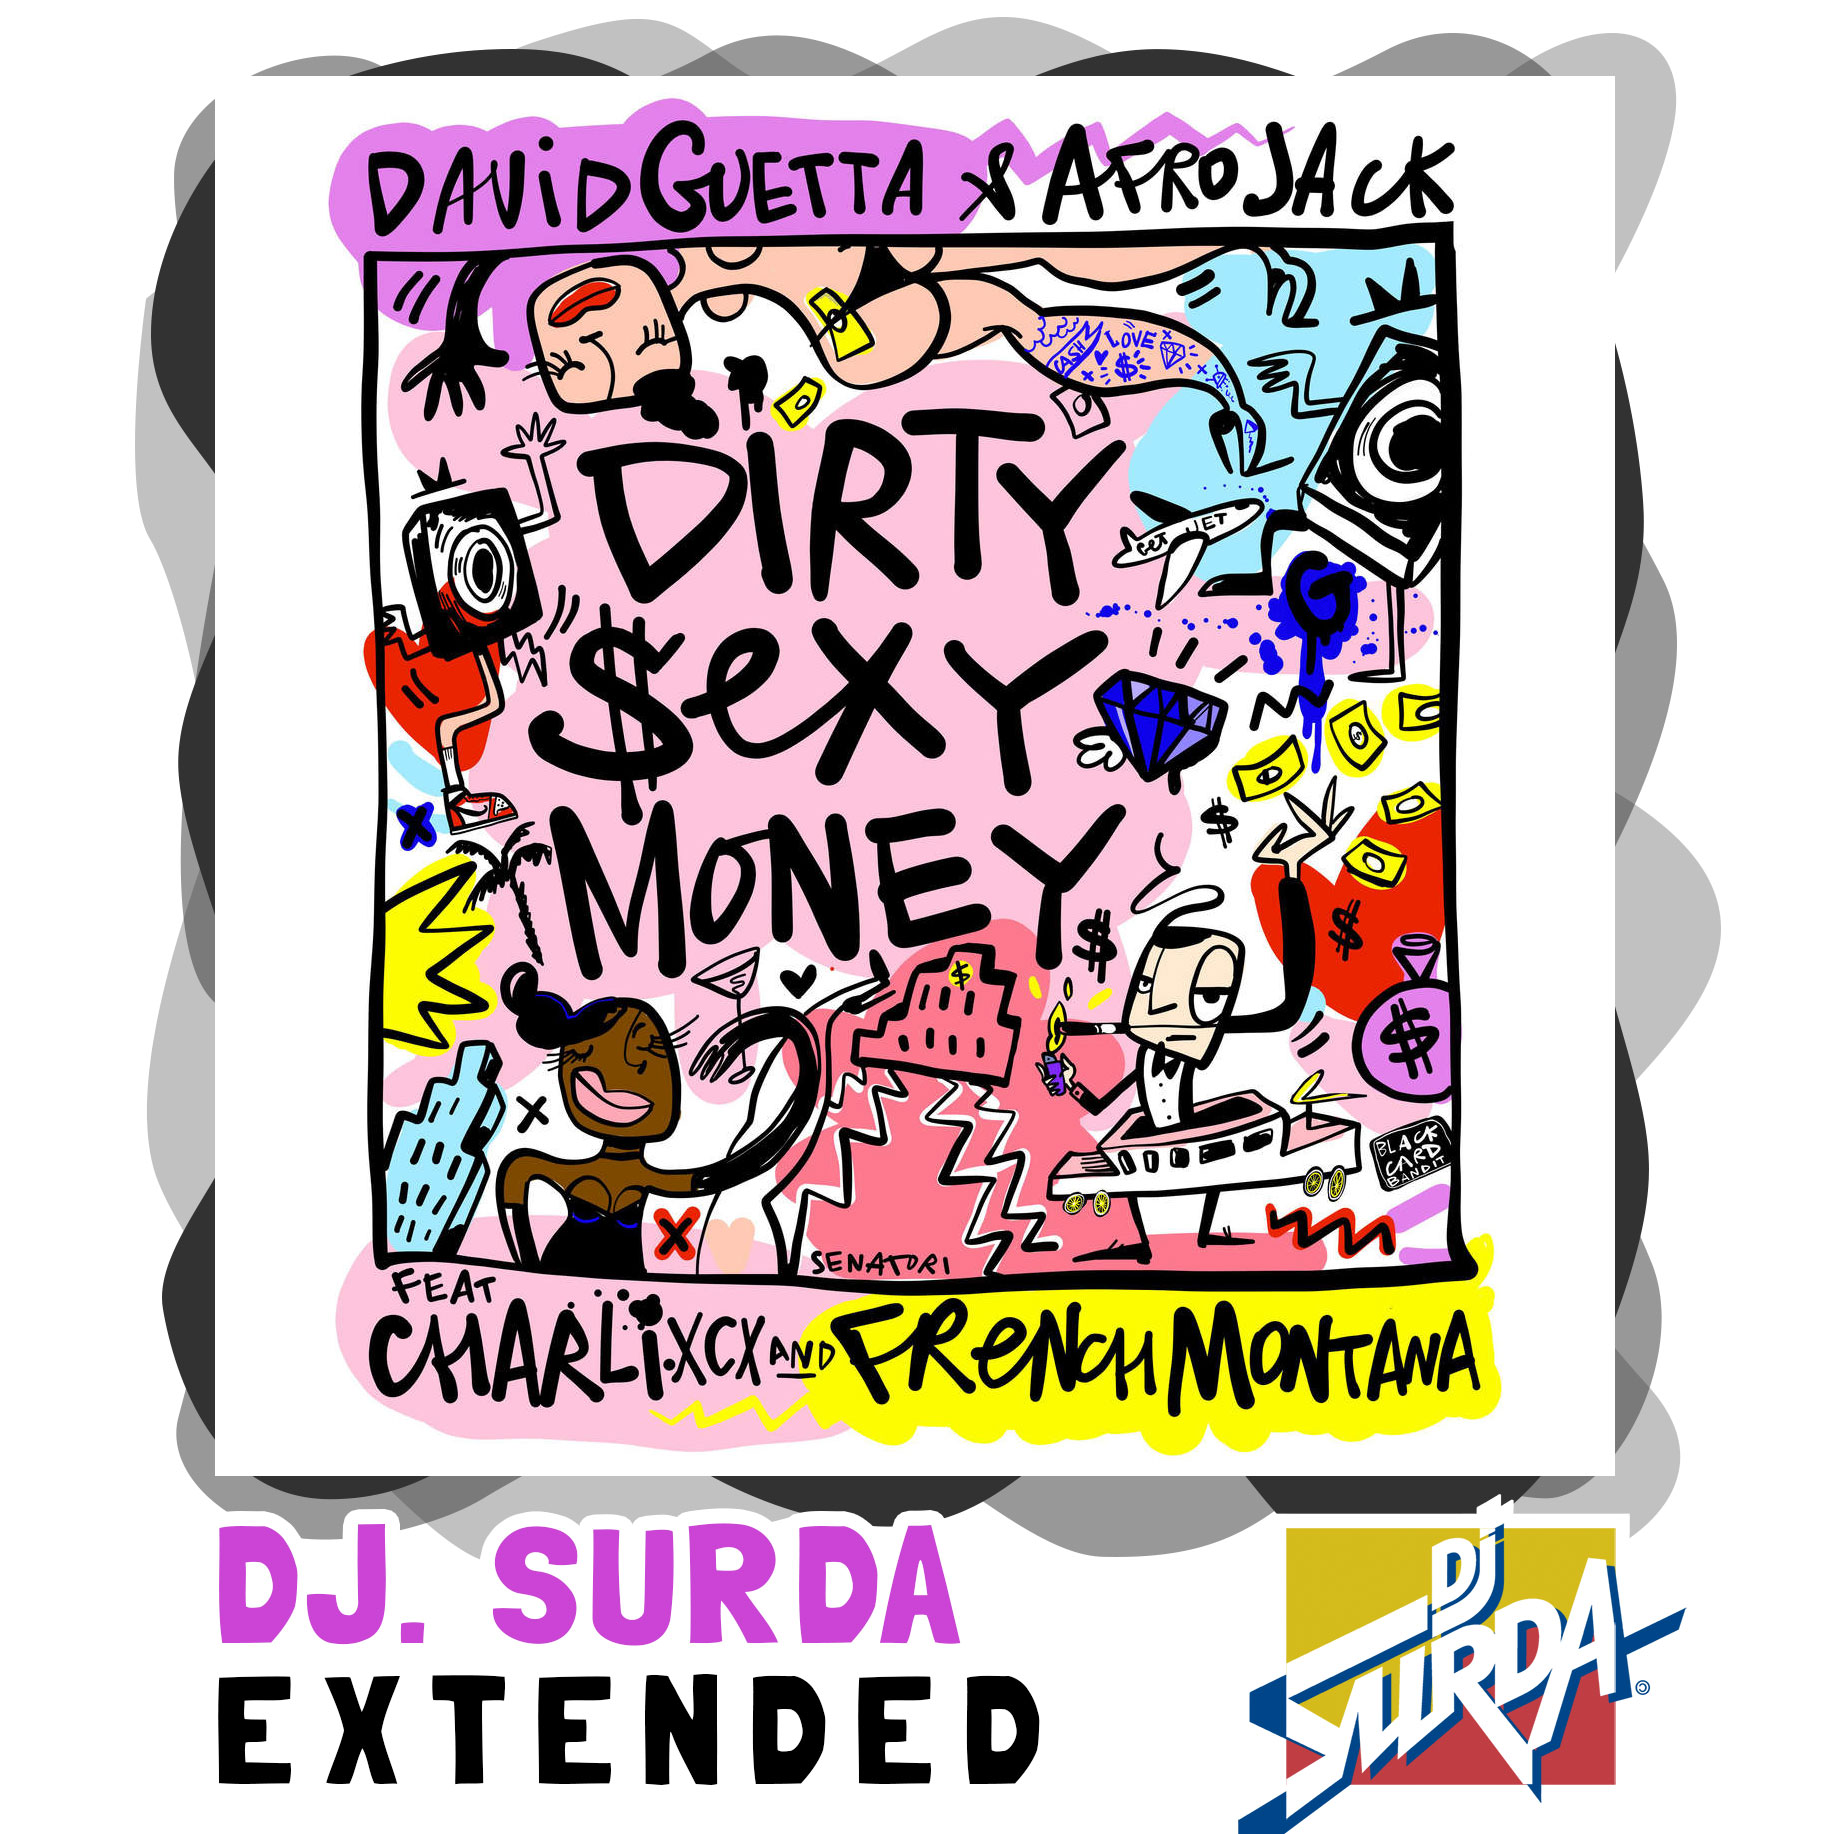 David Guetta & Afrojack feat. Charli XCX & French Montana – Dirty Sexy Money (Dj. Surda Extended Version)